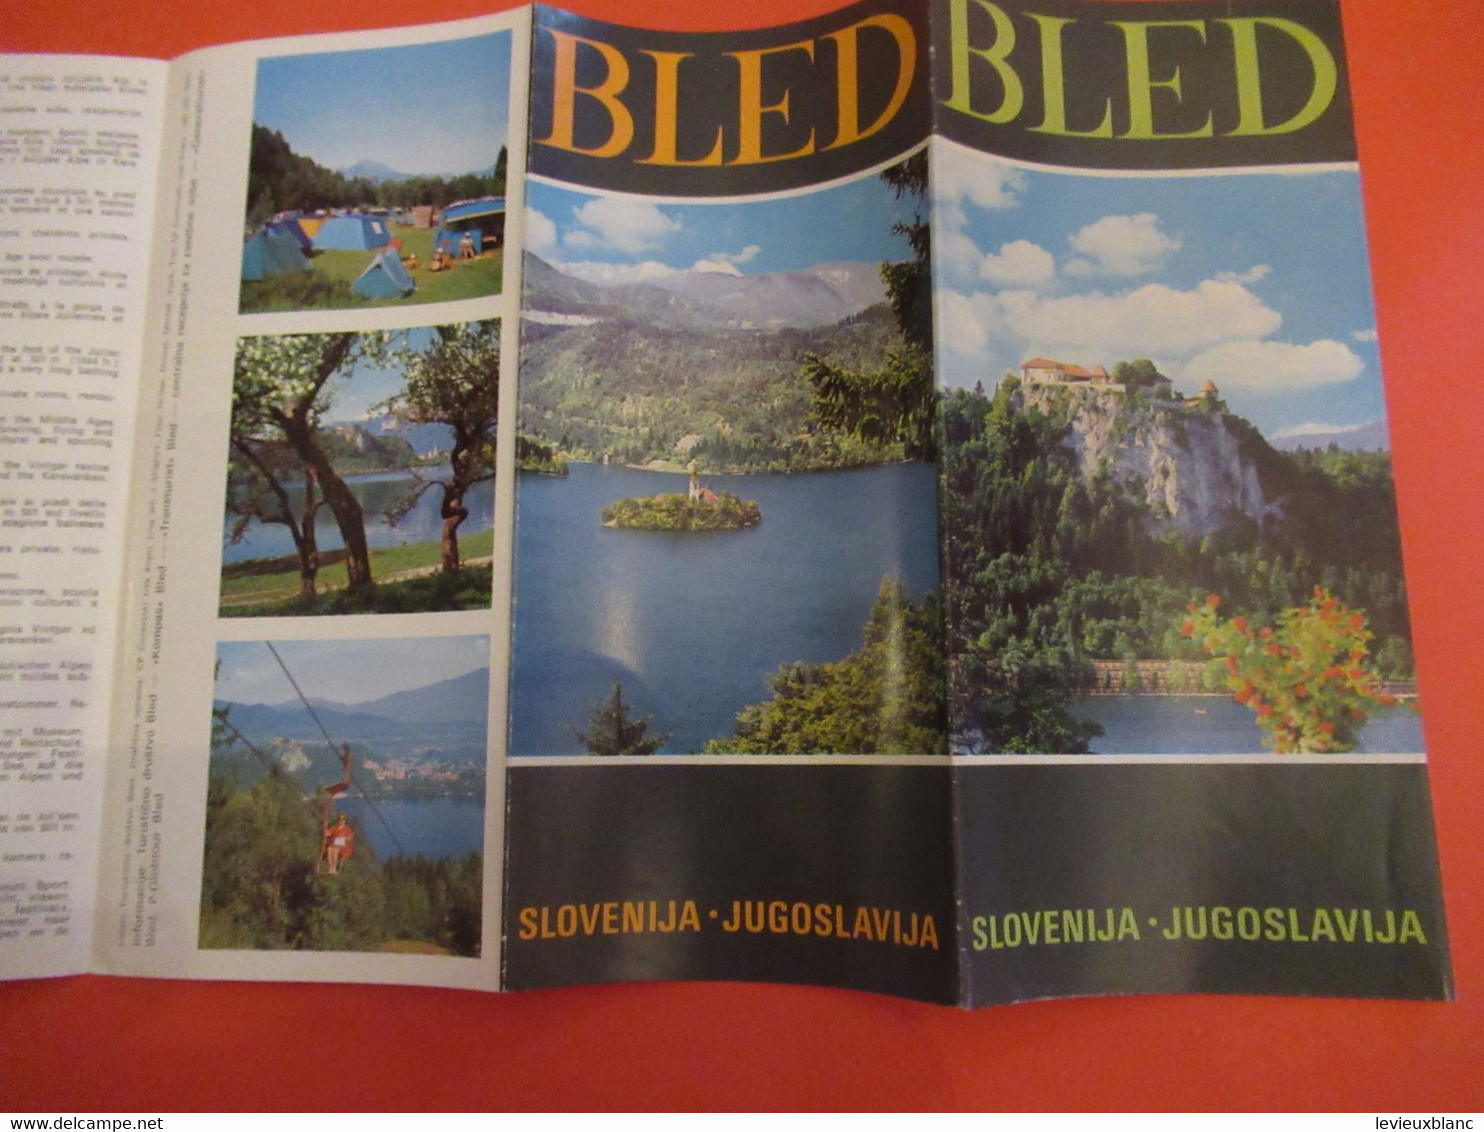 YOUGOSLAVIE/Slovenija - Jugoslavija/Izdalo Turisticno BLED /Savez Regiona / Beograd/1970                      PGC484 - Dépliants Touristiques